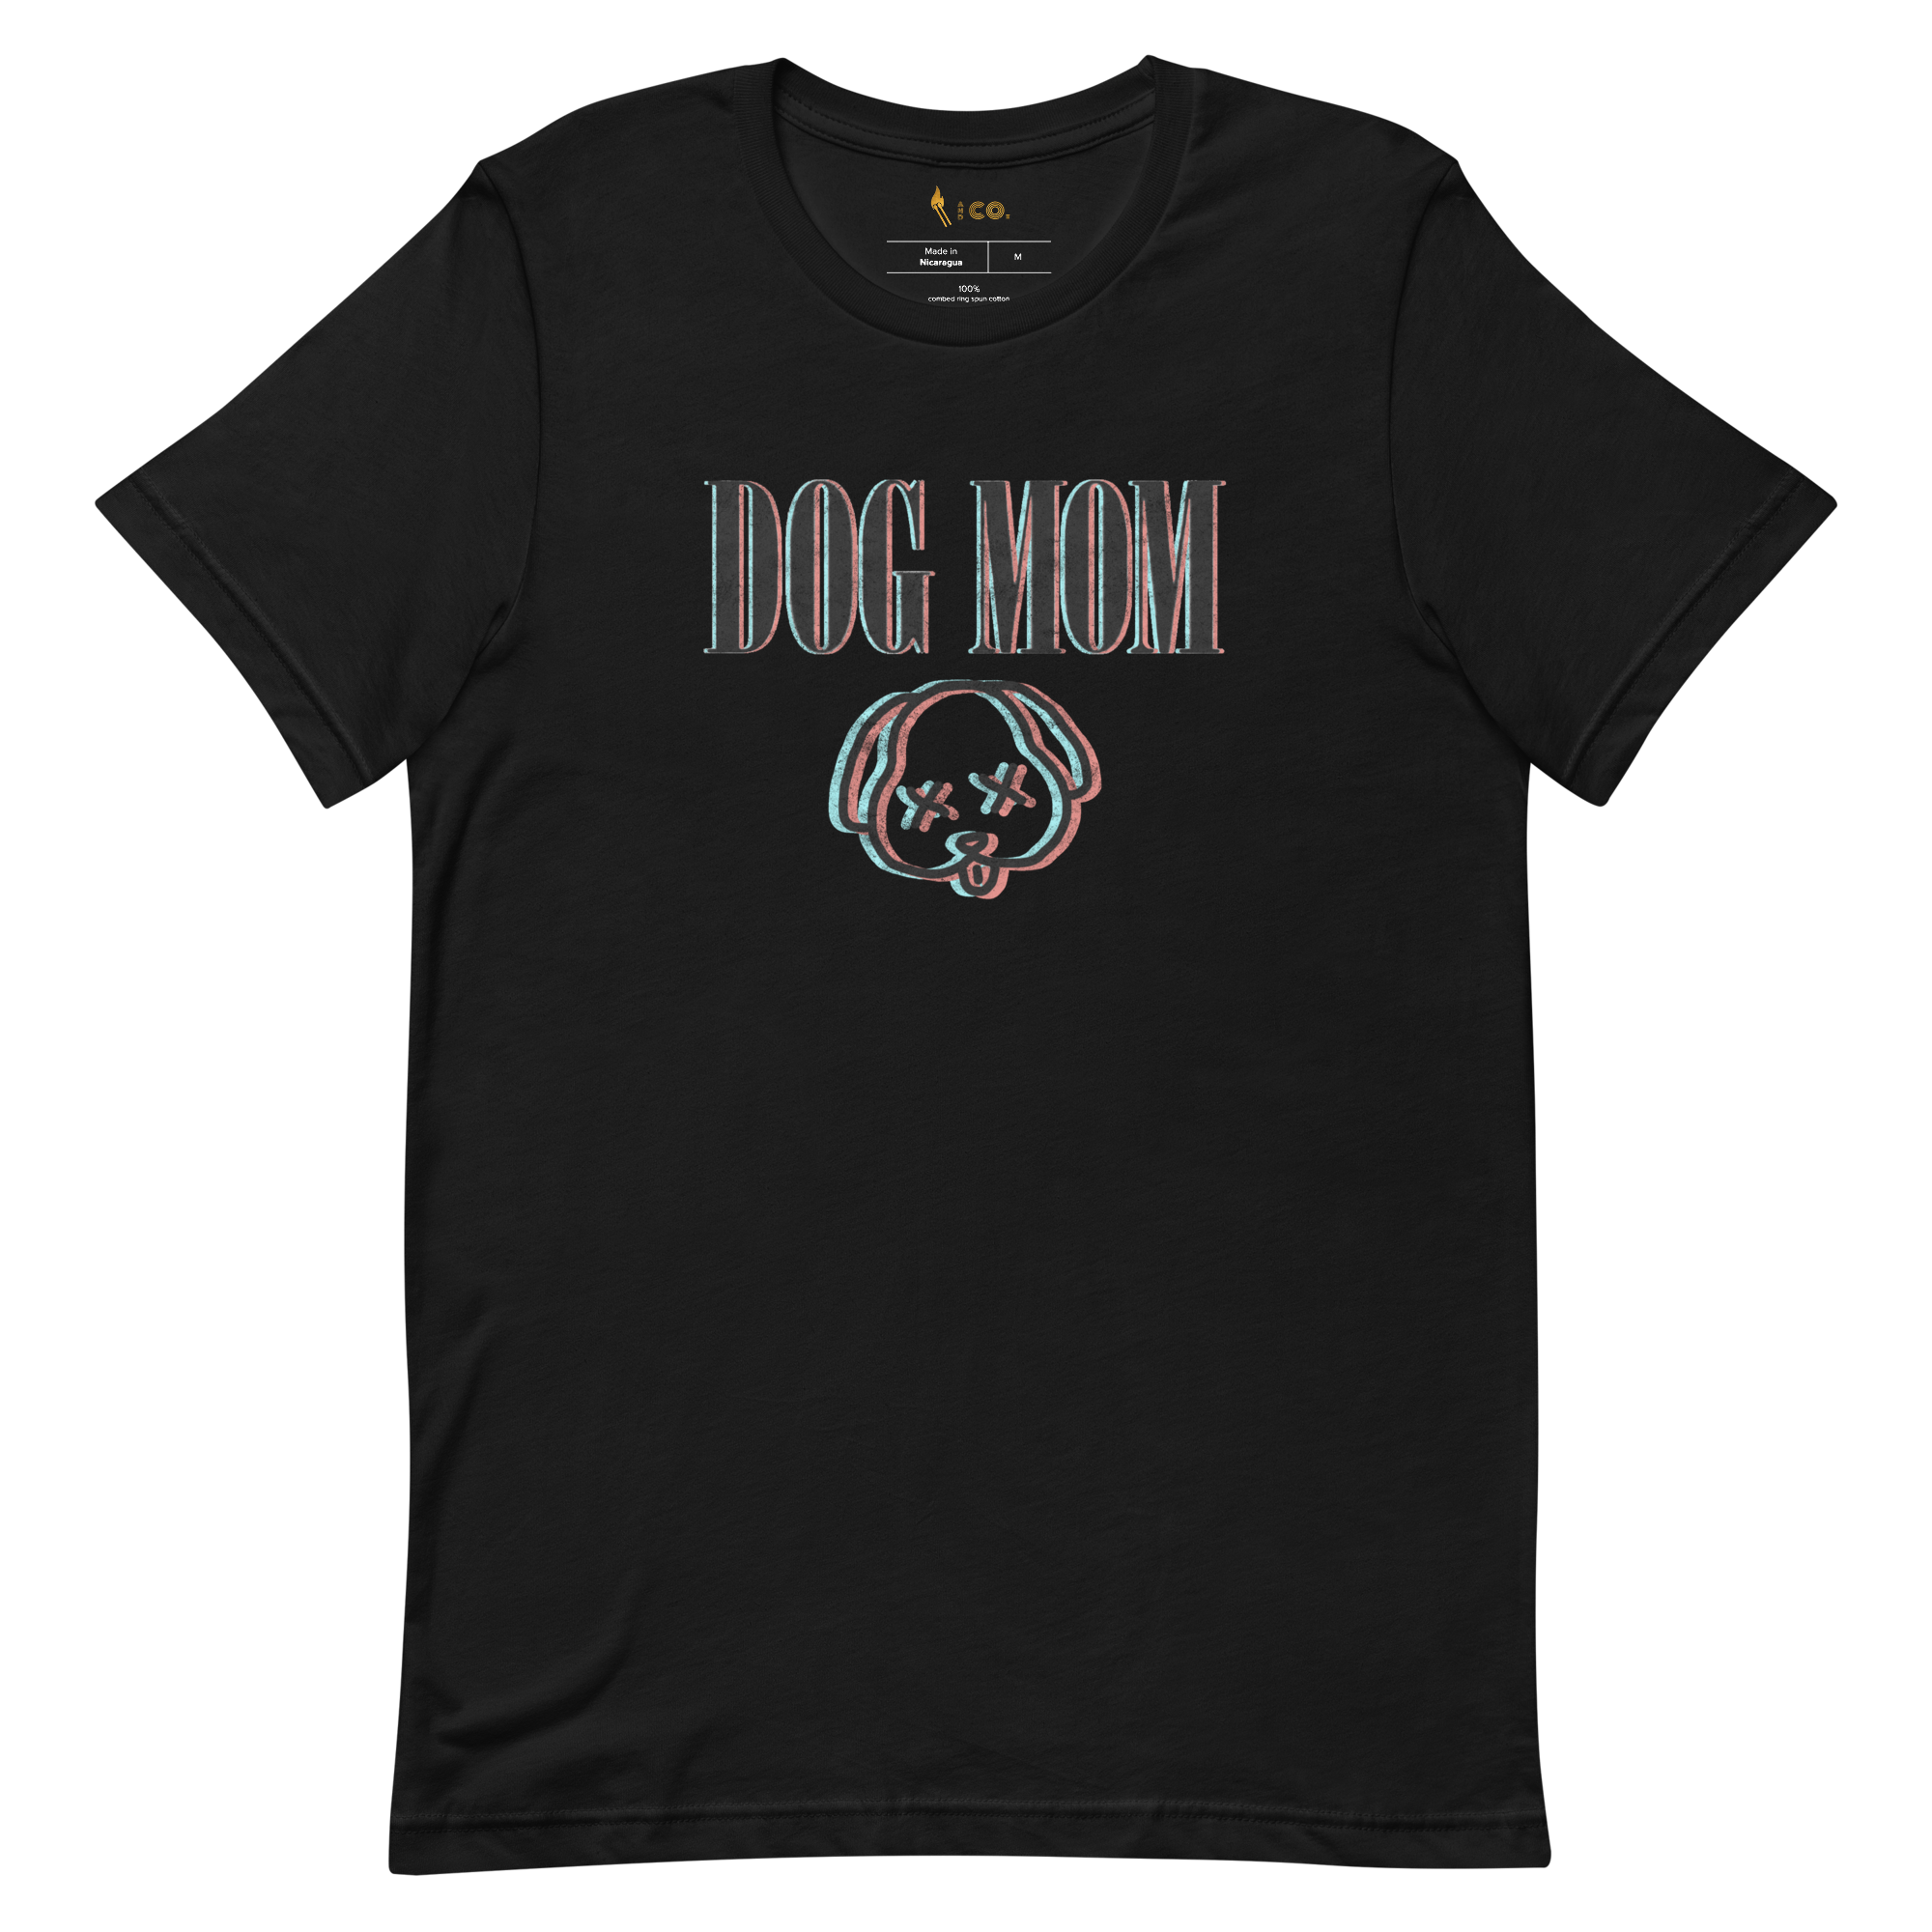 90's Dog Mom T-Shirt